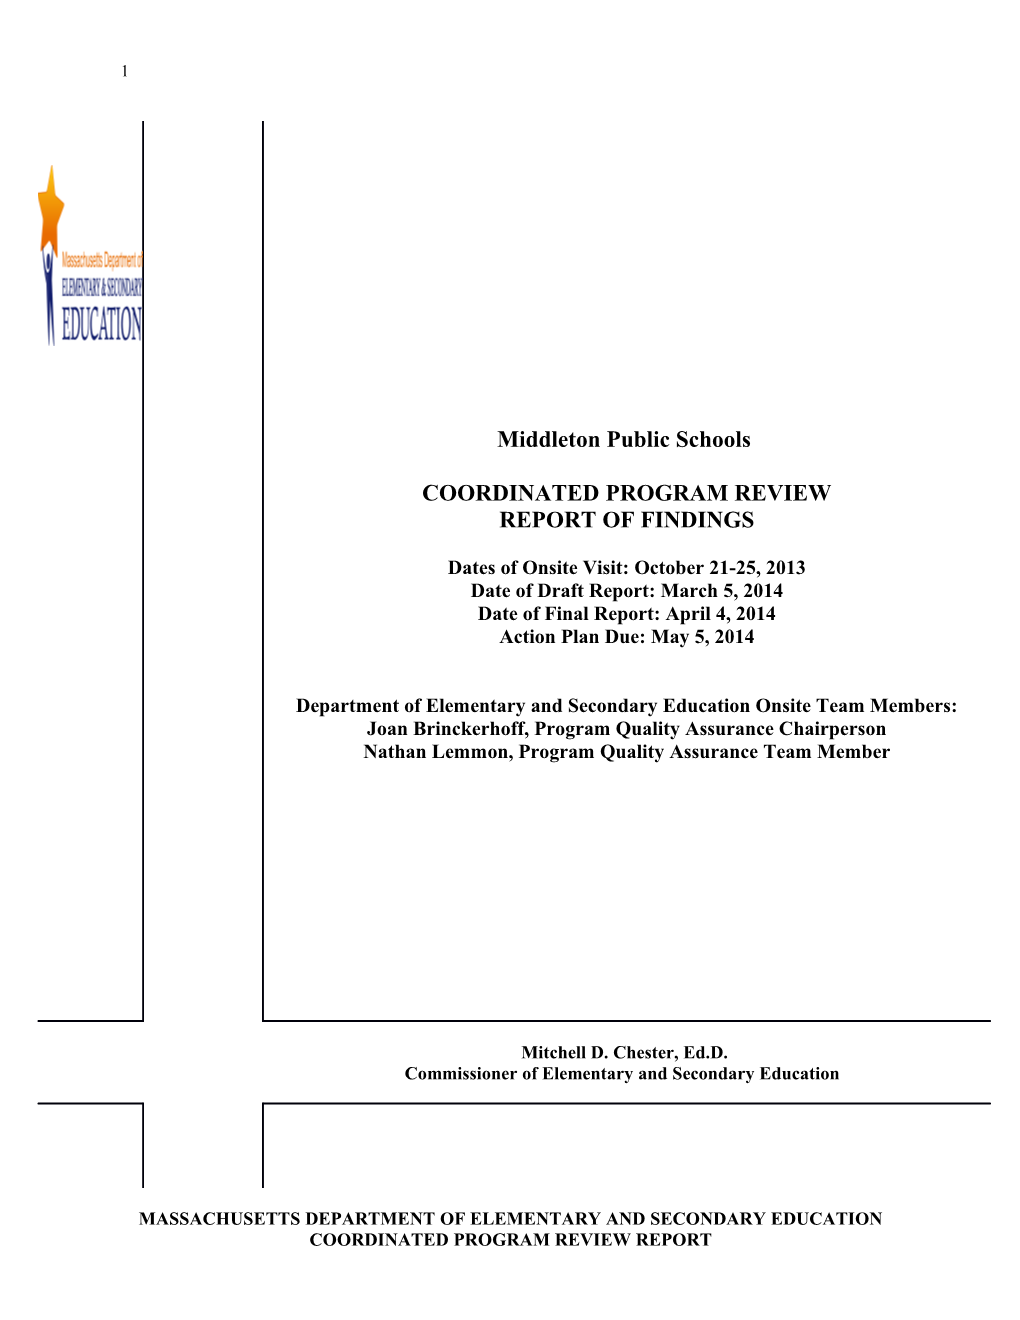 Middleton Public Schools CPR Final Report 2014